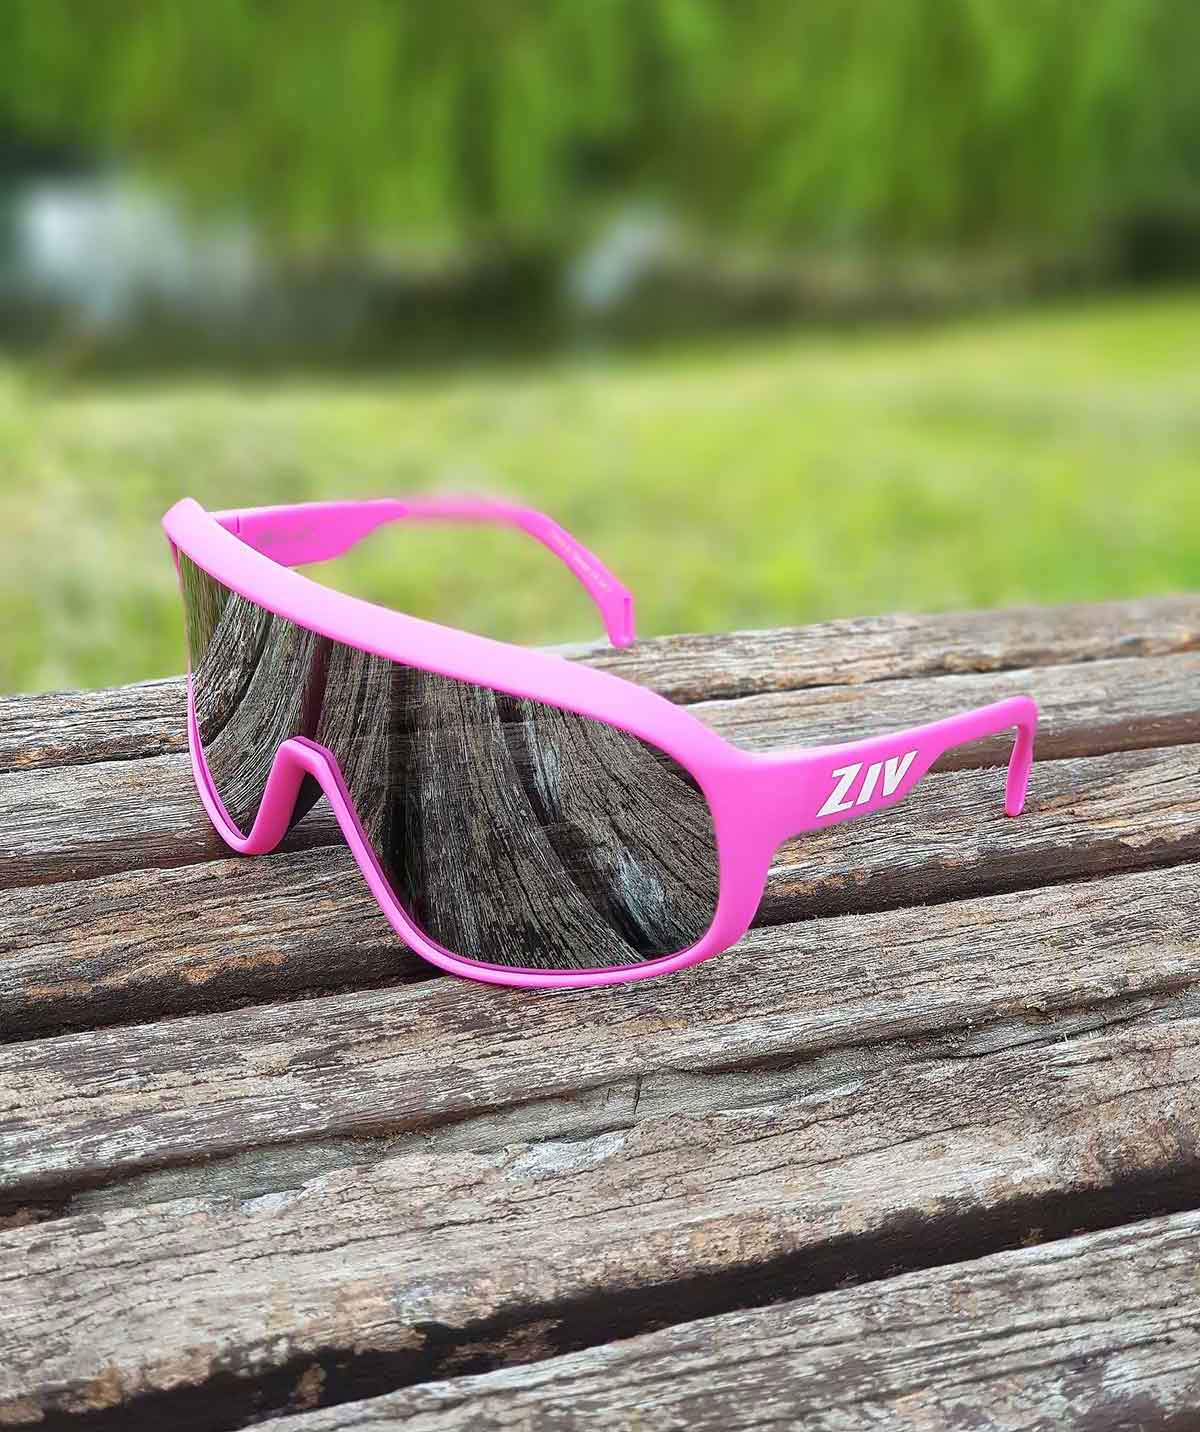 BULK系列編號126的螢光粉紅框運動眼鏡